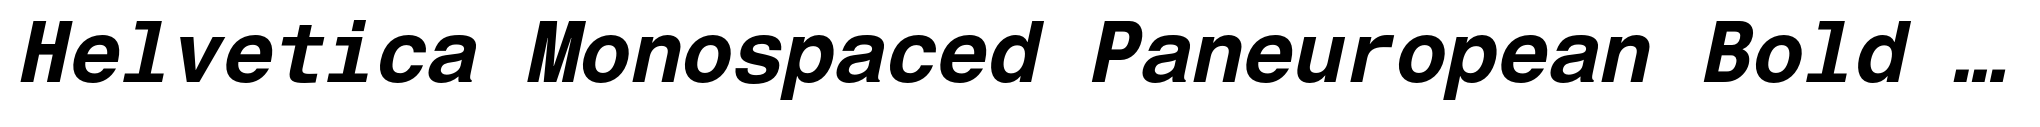 Helvetica Monospaced Paneuropean Bold Italic image